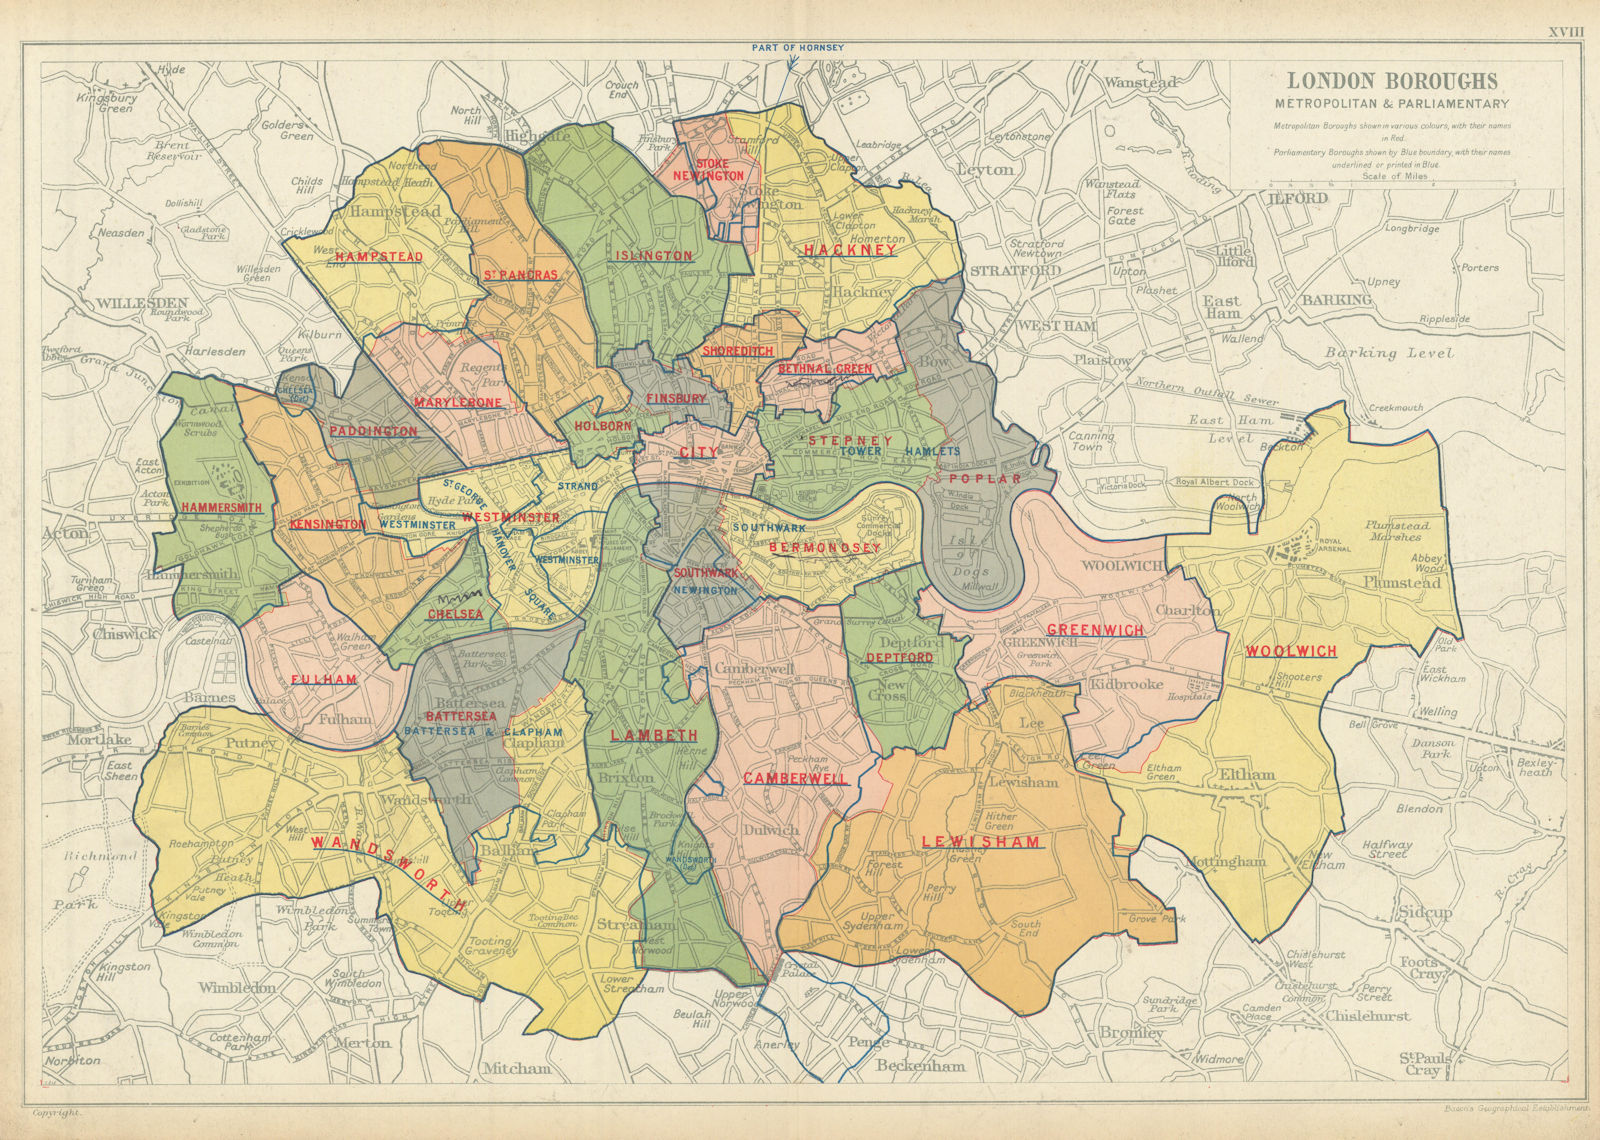 LONDON BOROUGHS. Metropolitan & Parliamentary. Constituencies. BACON 1913 map